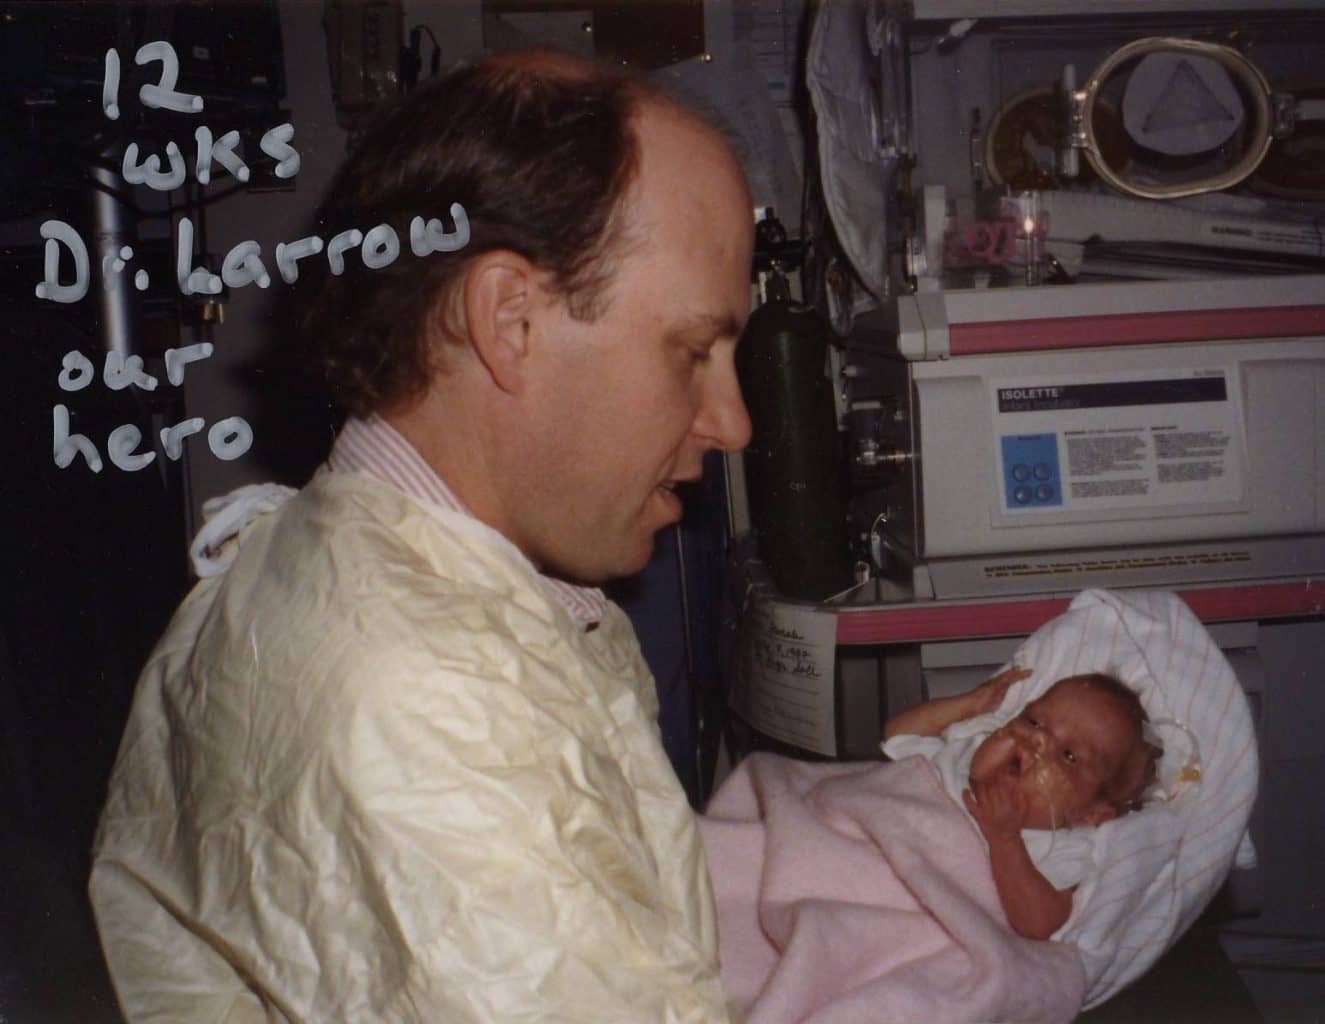 Image: Louisa being held by Dr. Larrow